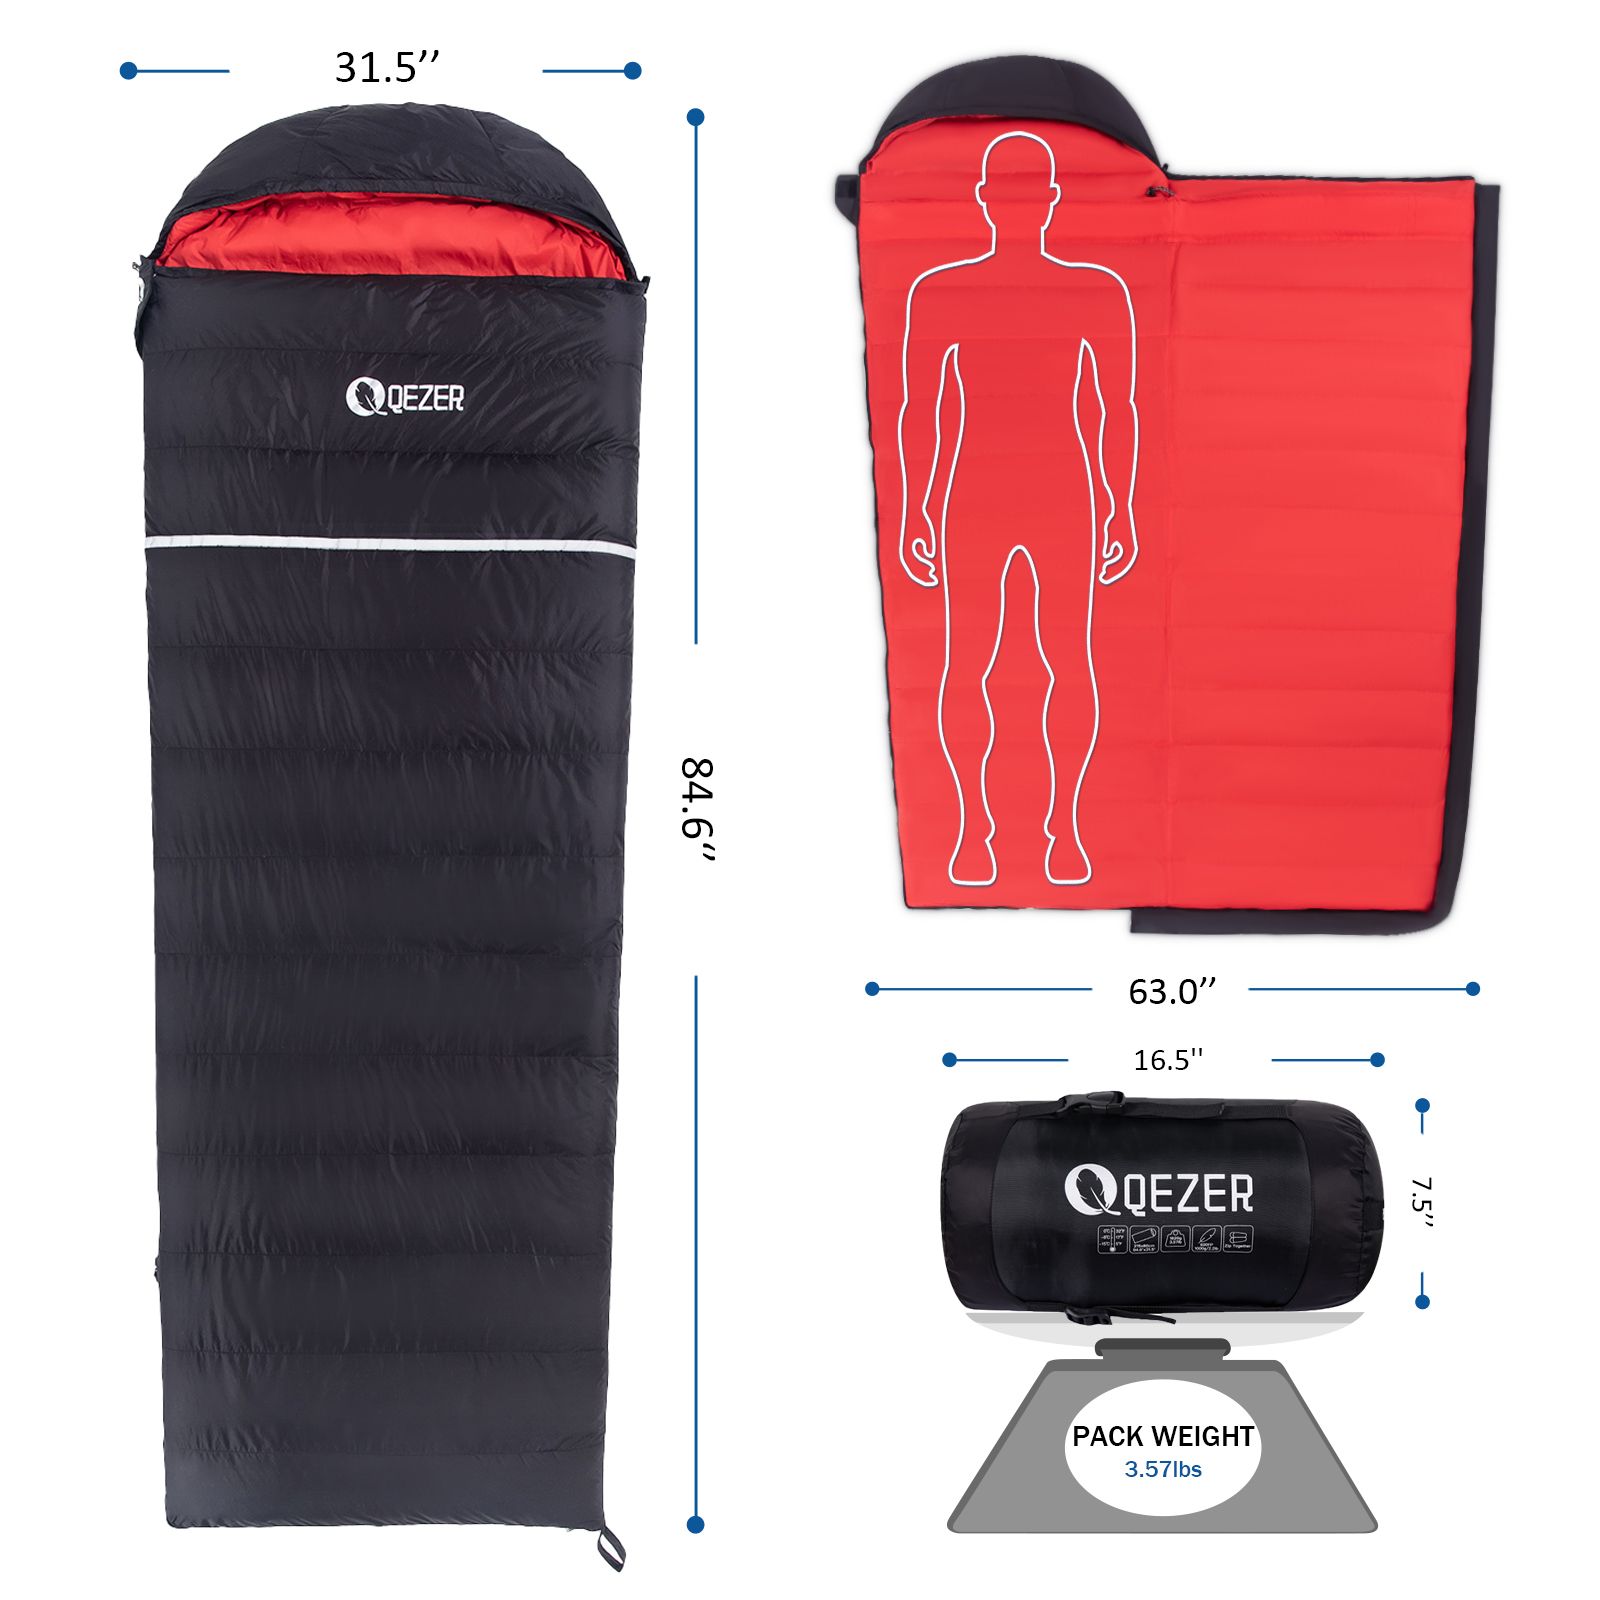 Qezer羽绒睡袋10°F 32°，用于露营、背包旅行